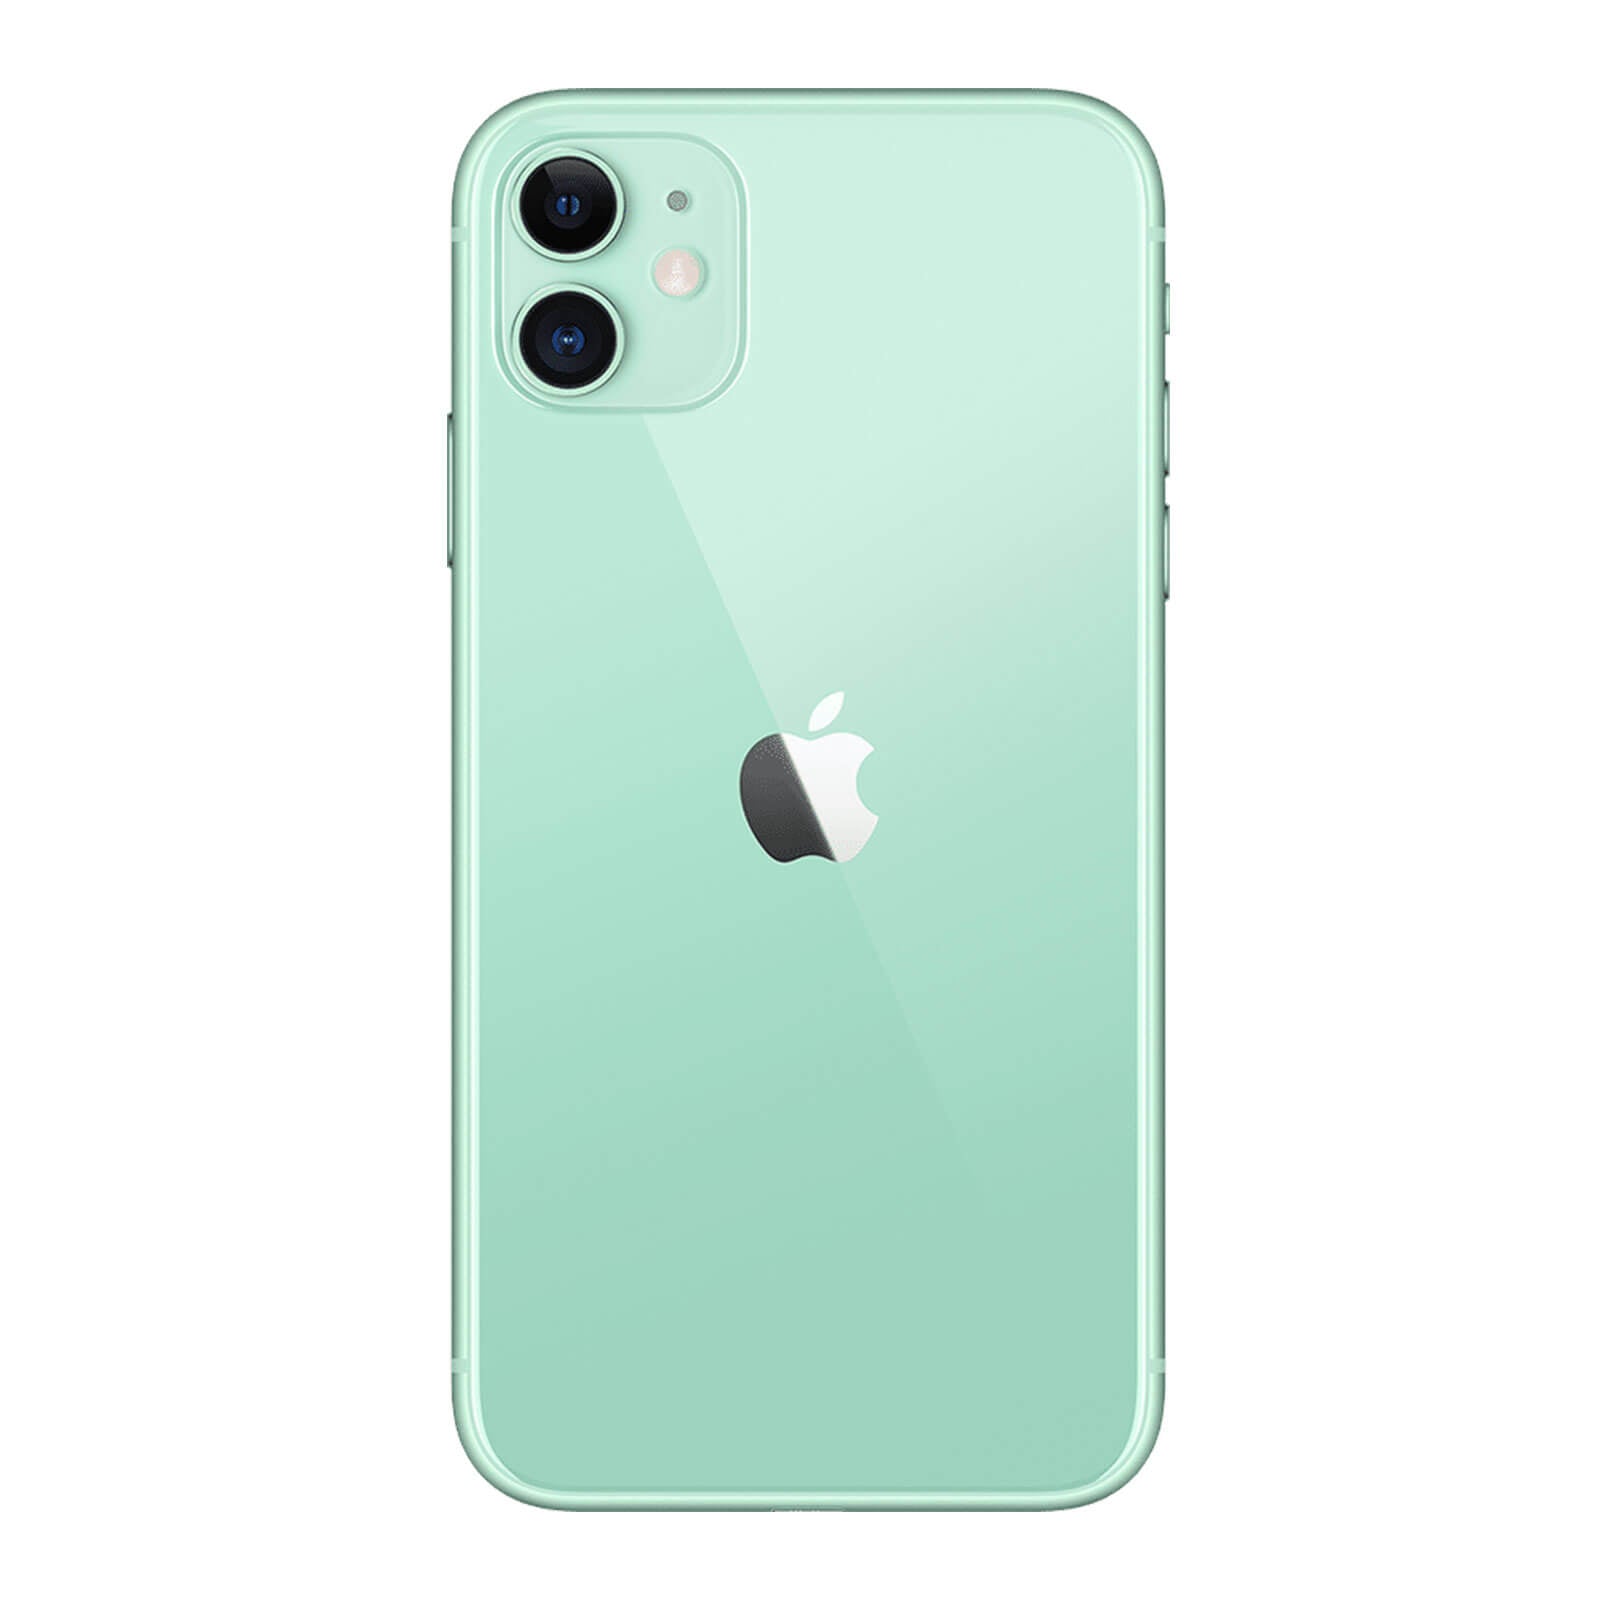 Apple iPhone 11 128GB Green Fair - AT&T